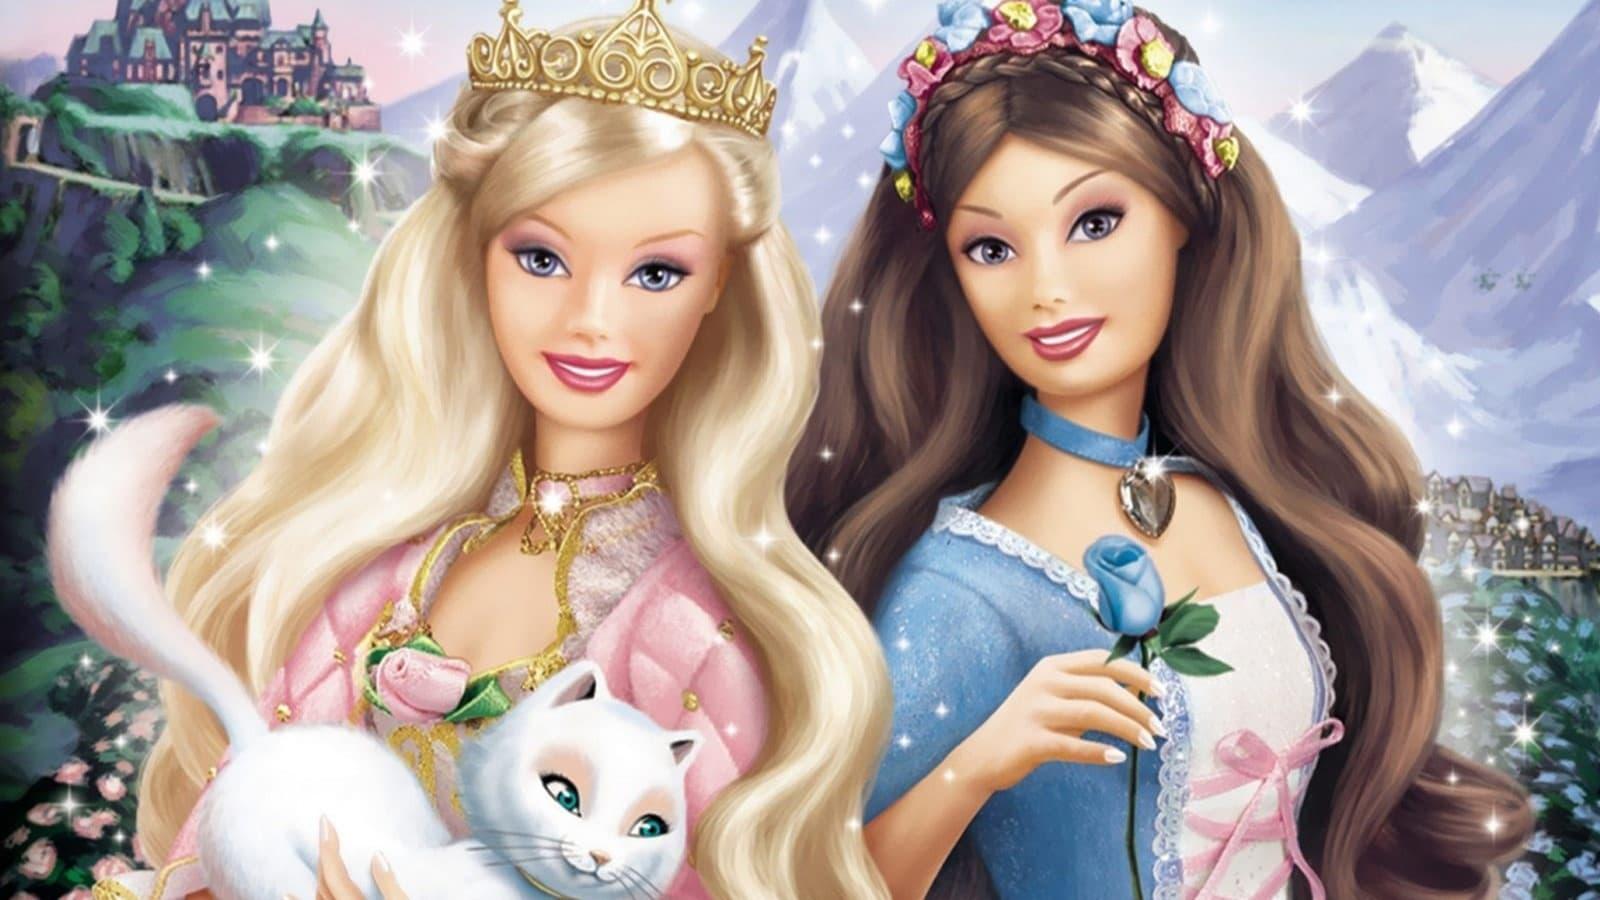 Barbie as The Princess & the Pauper backdrop